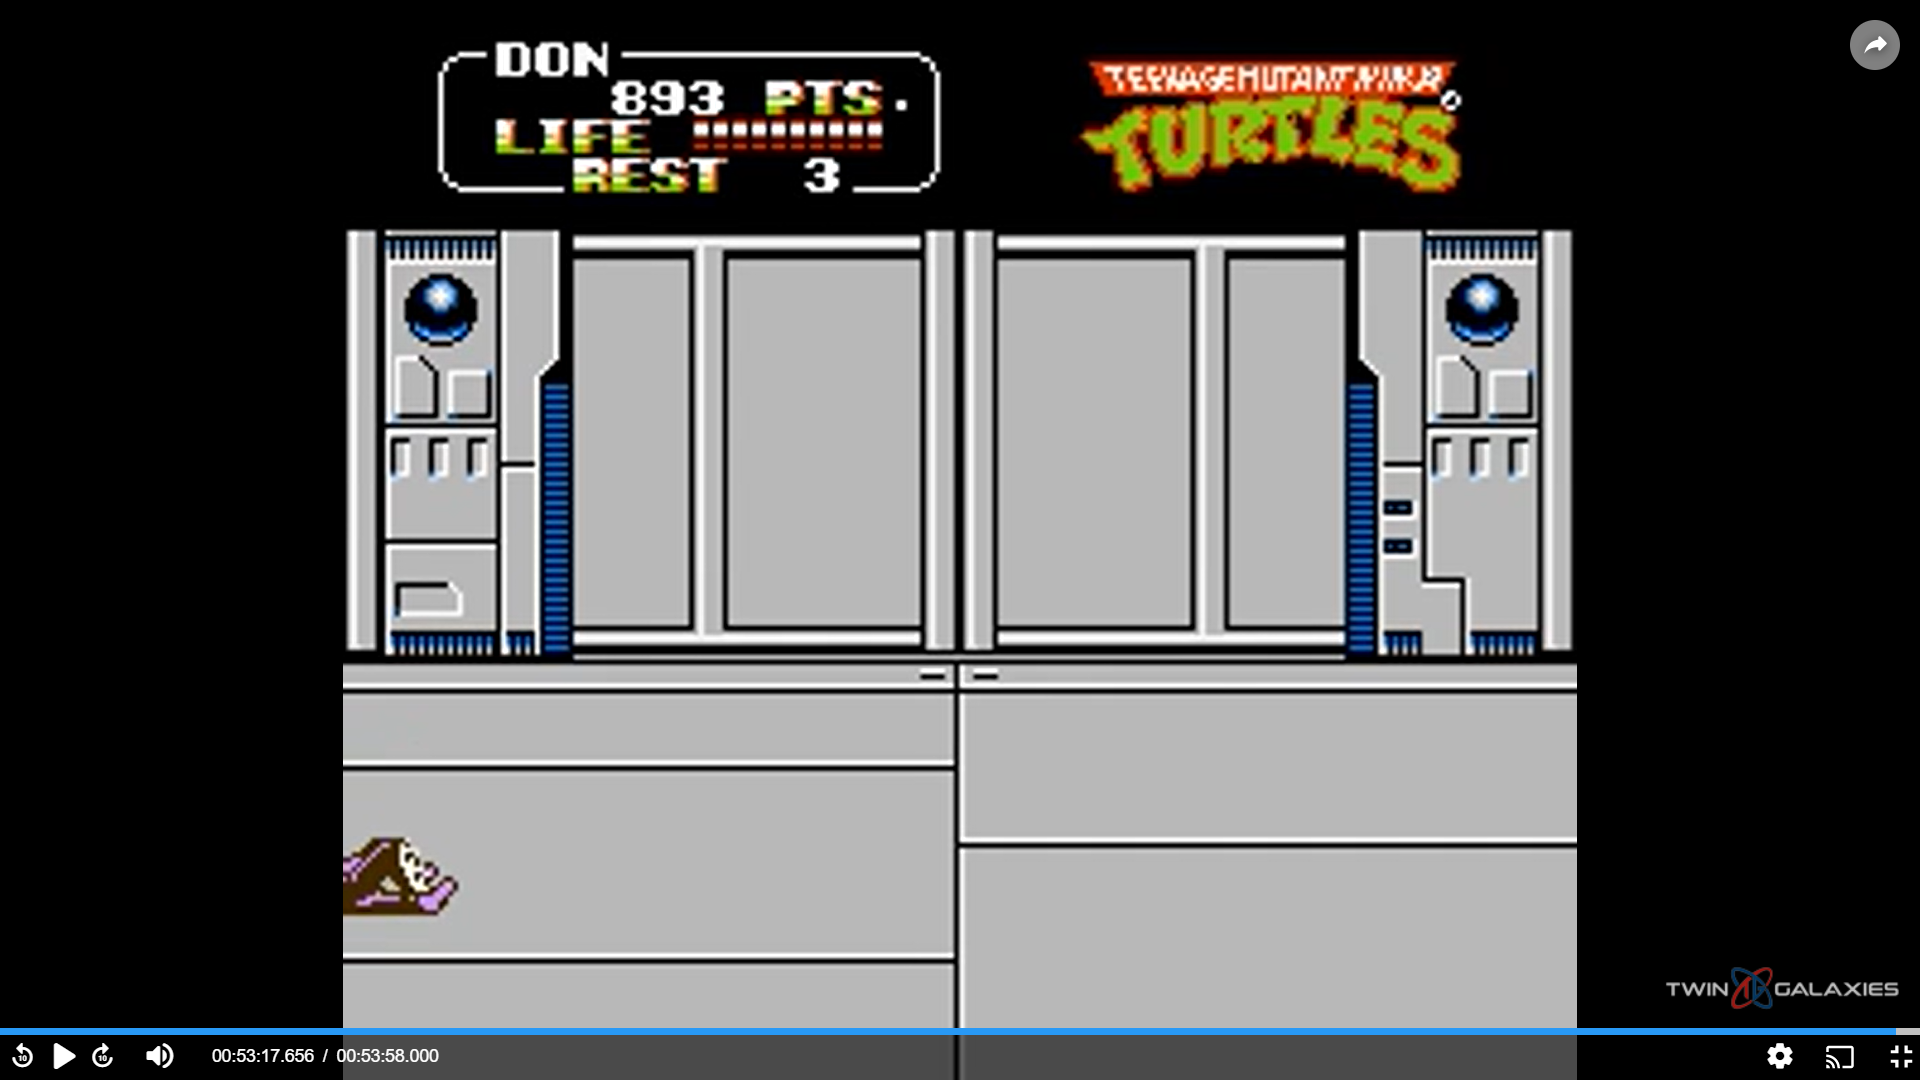 Teenage Mutant Ninja Turtles II: The Arcade Game [Continues allowed] 893 points